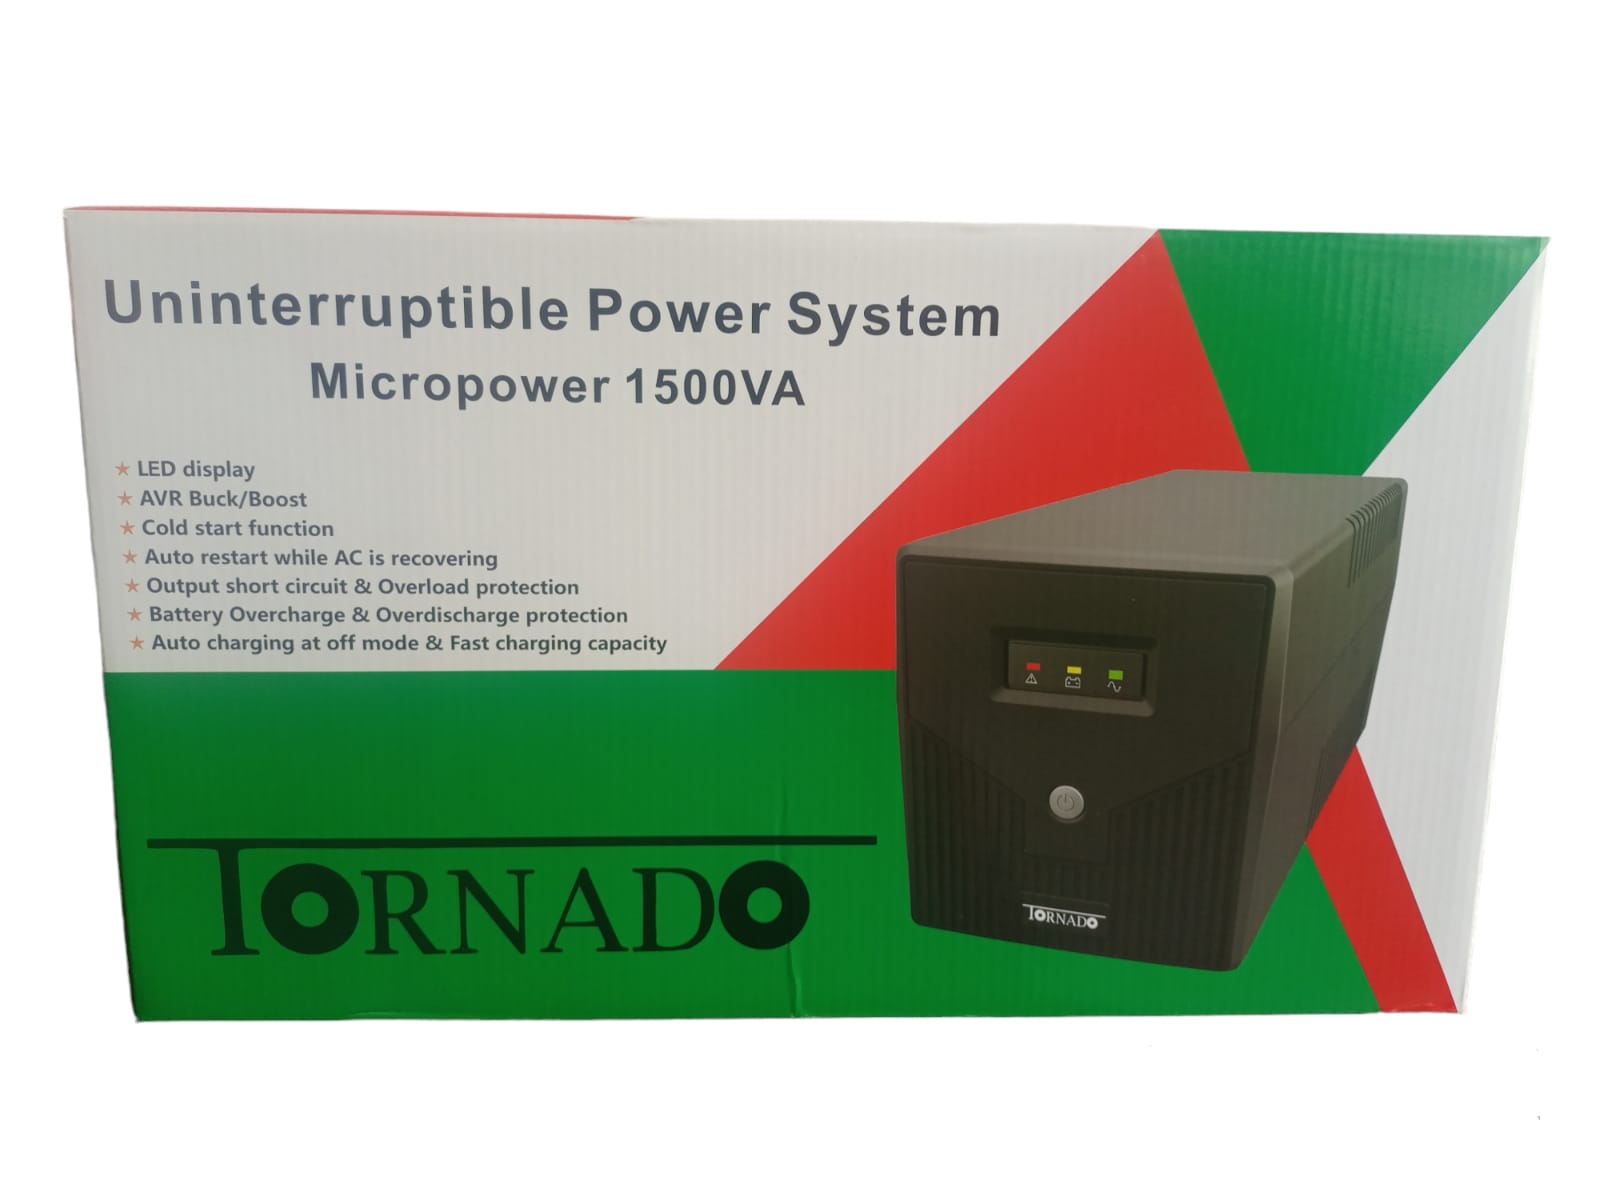 Tornado UPS Uninterruptible Power System Micropower 1500VA